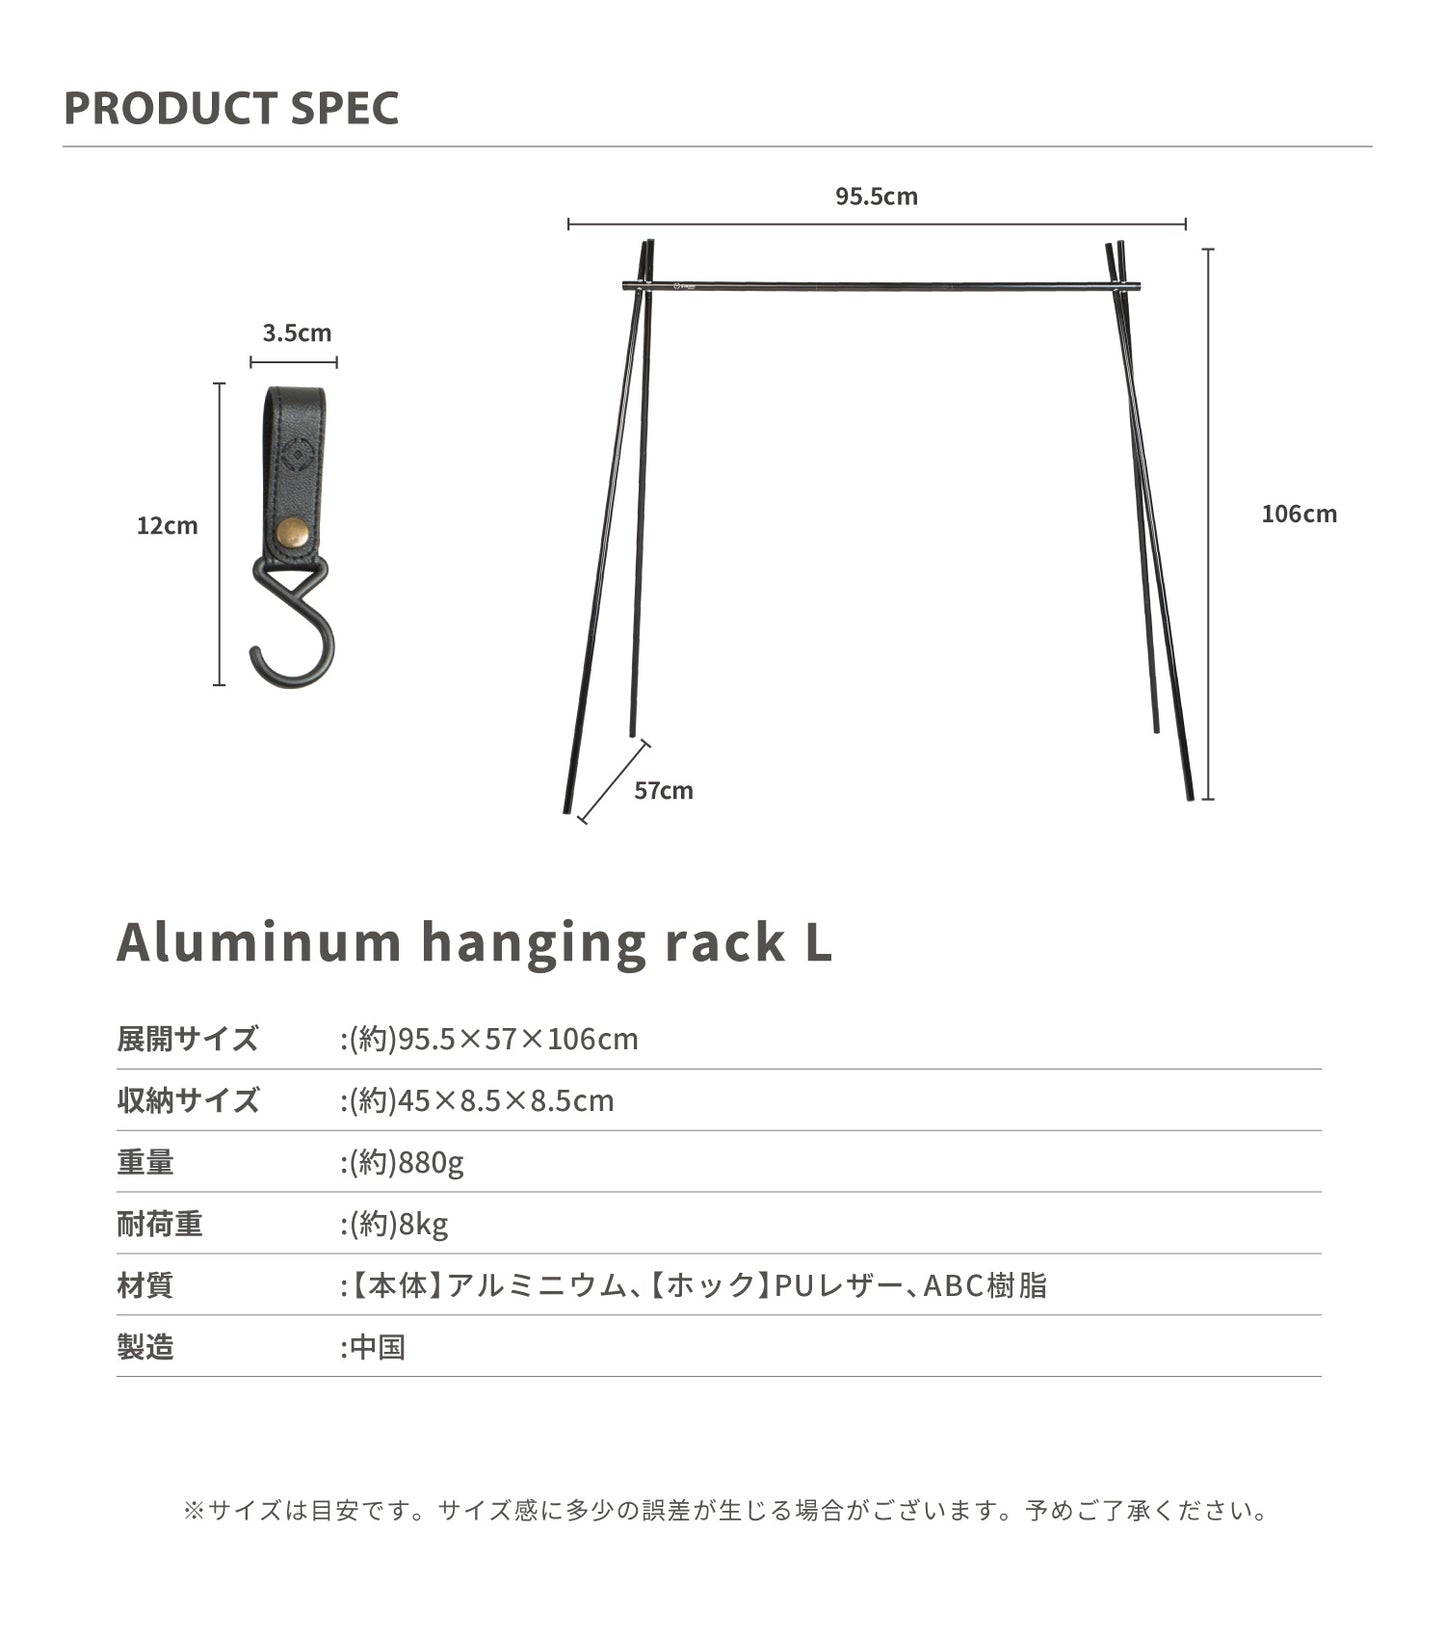 Aluminum hanging lack 鋁合金掛架(L Size)